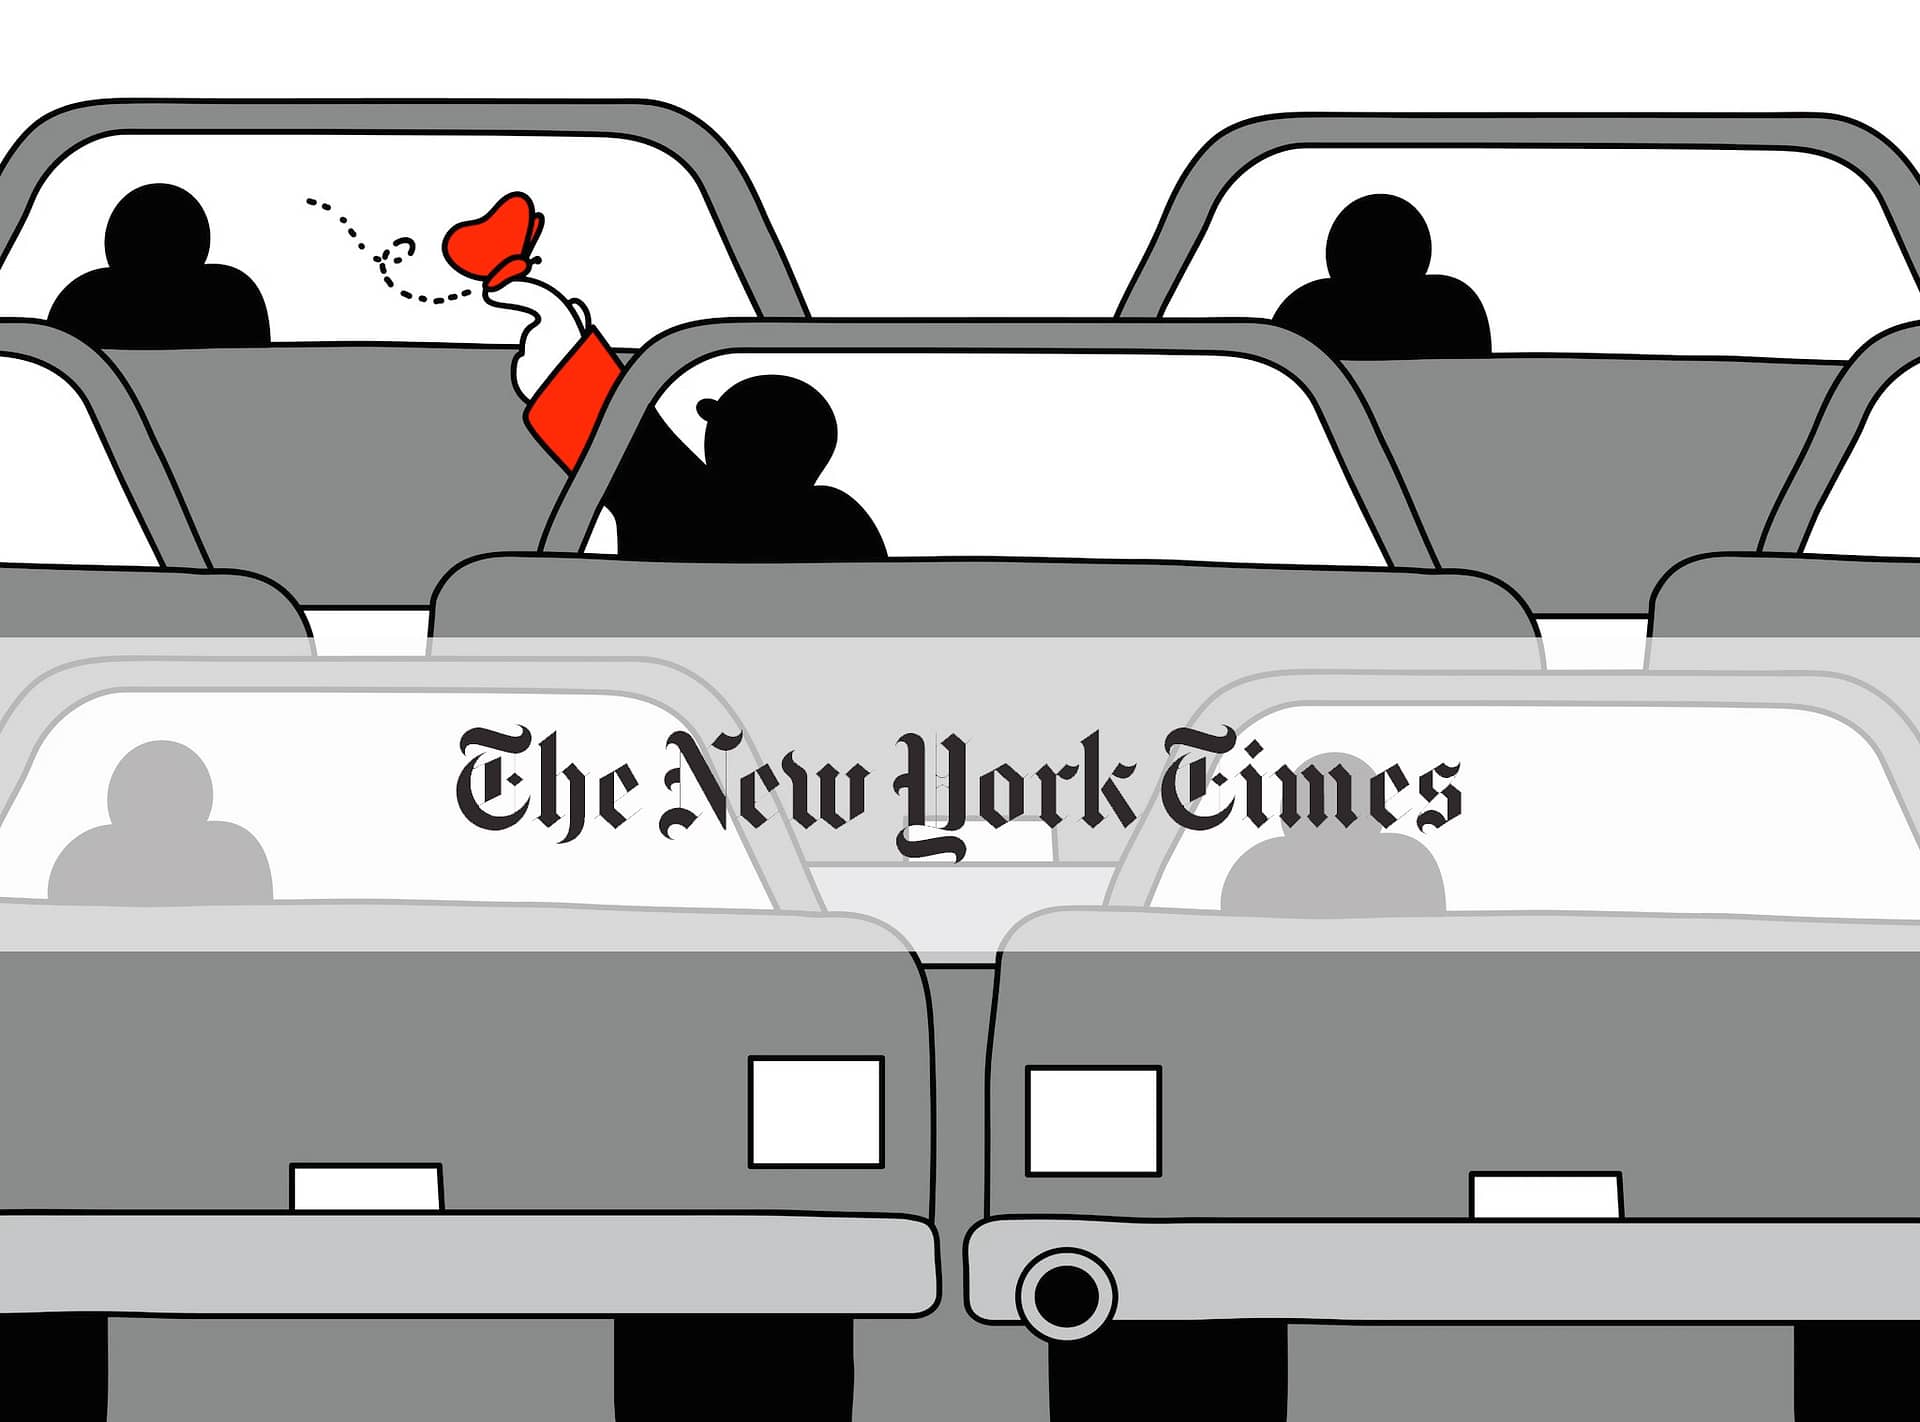 New York Times: Forgiving Enemies